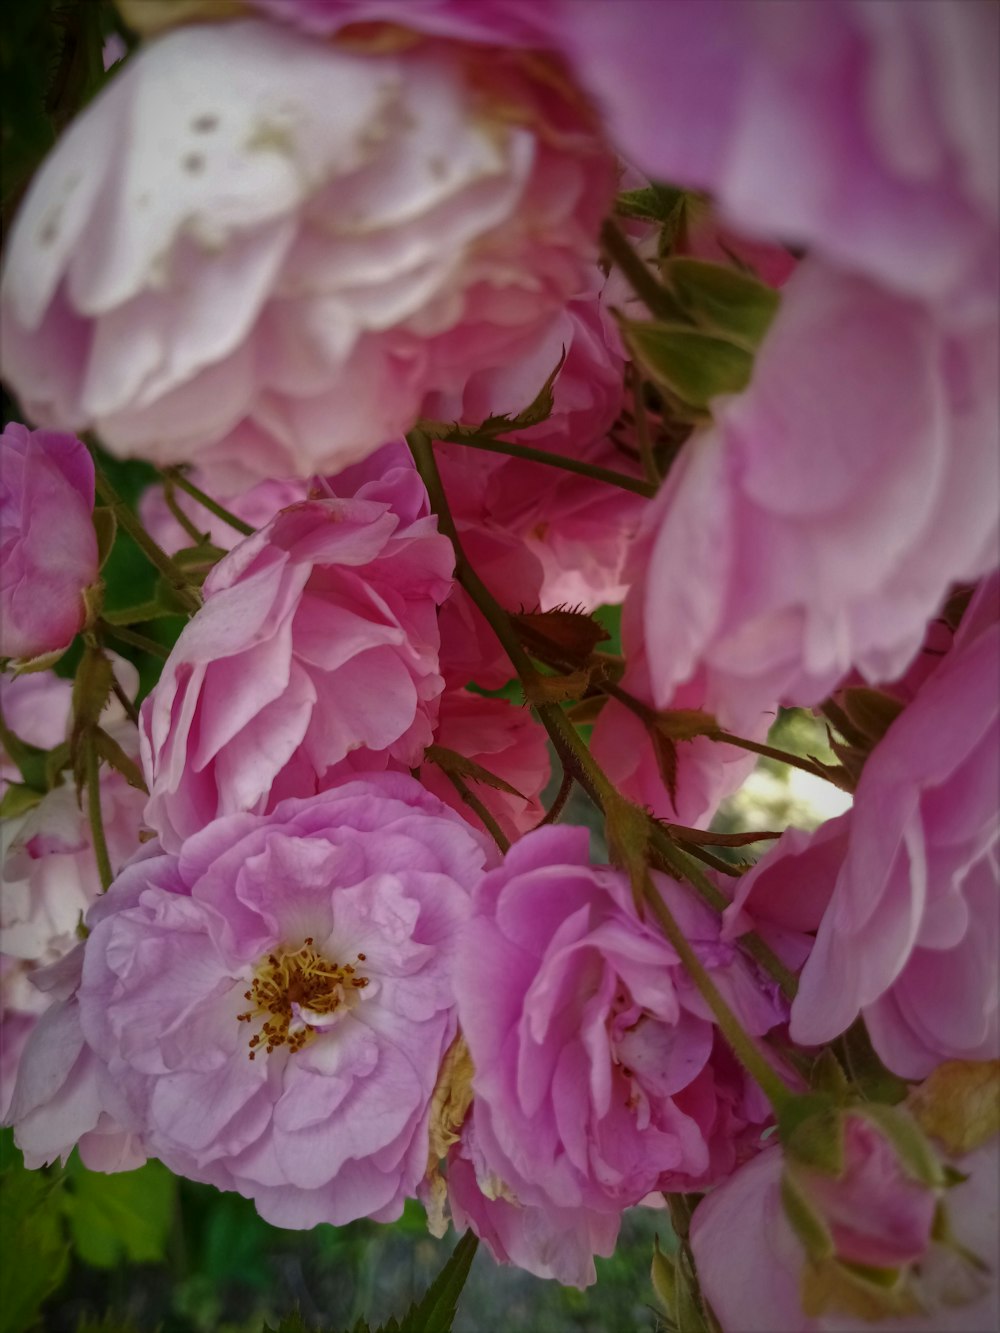 un ramo de flores rosadas que están en un jarrón